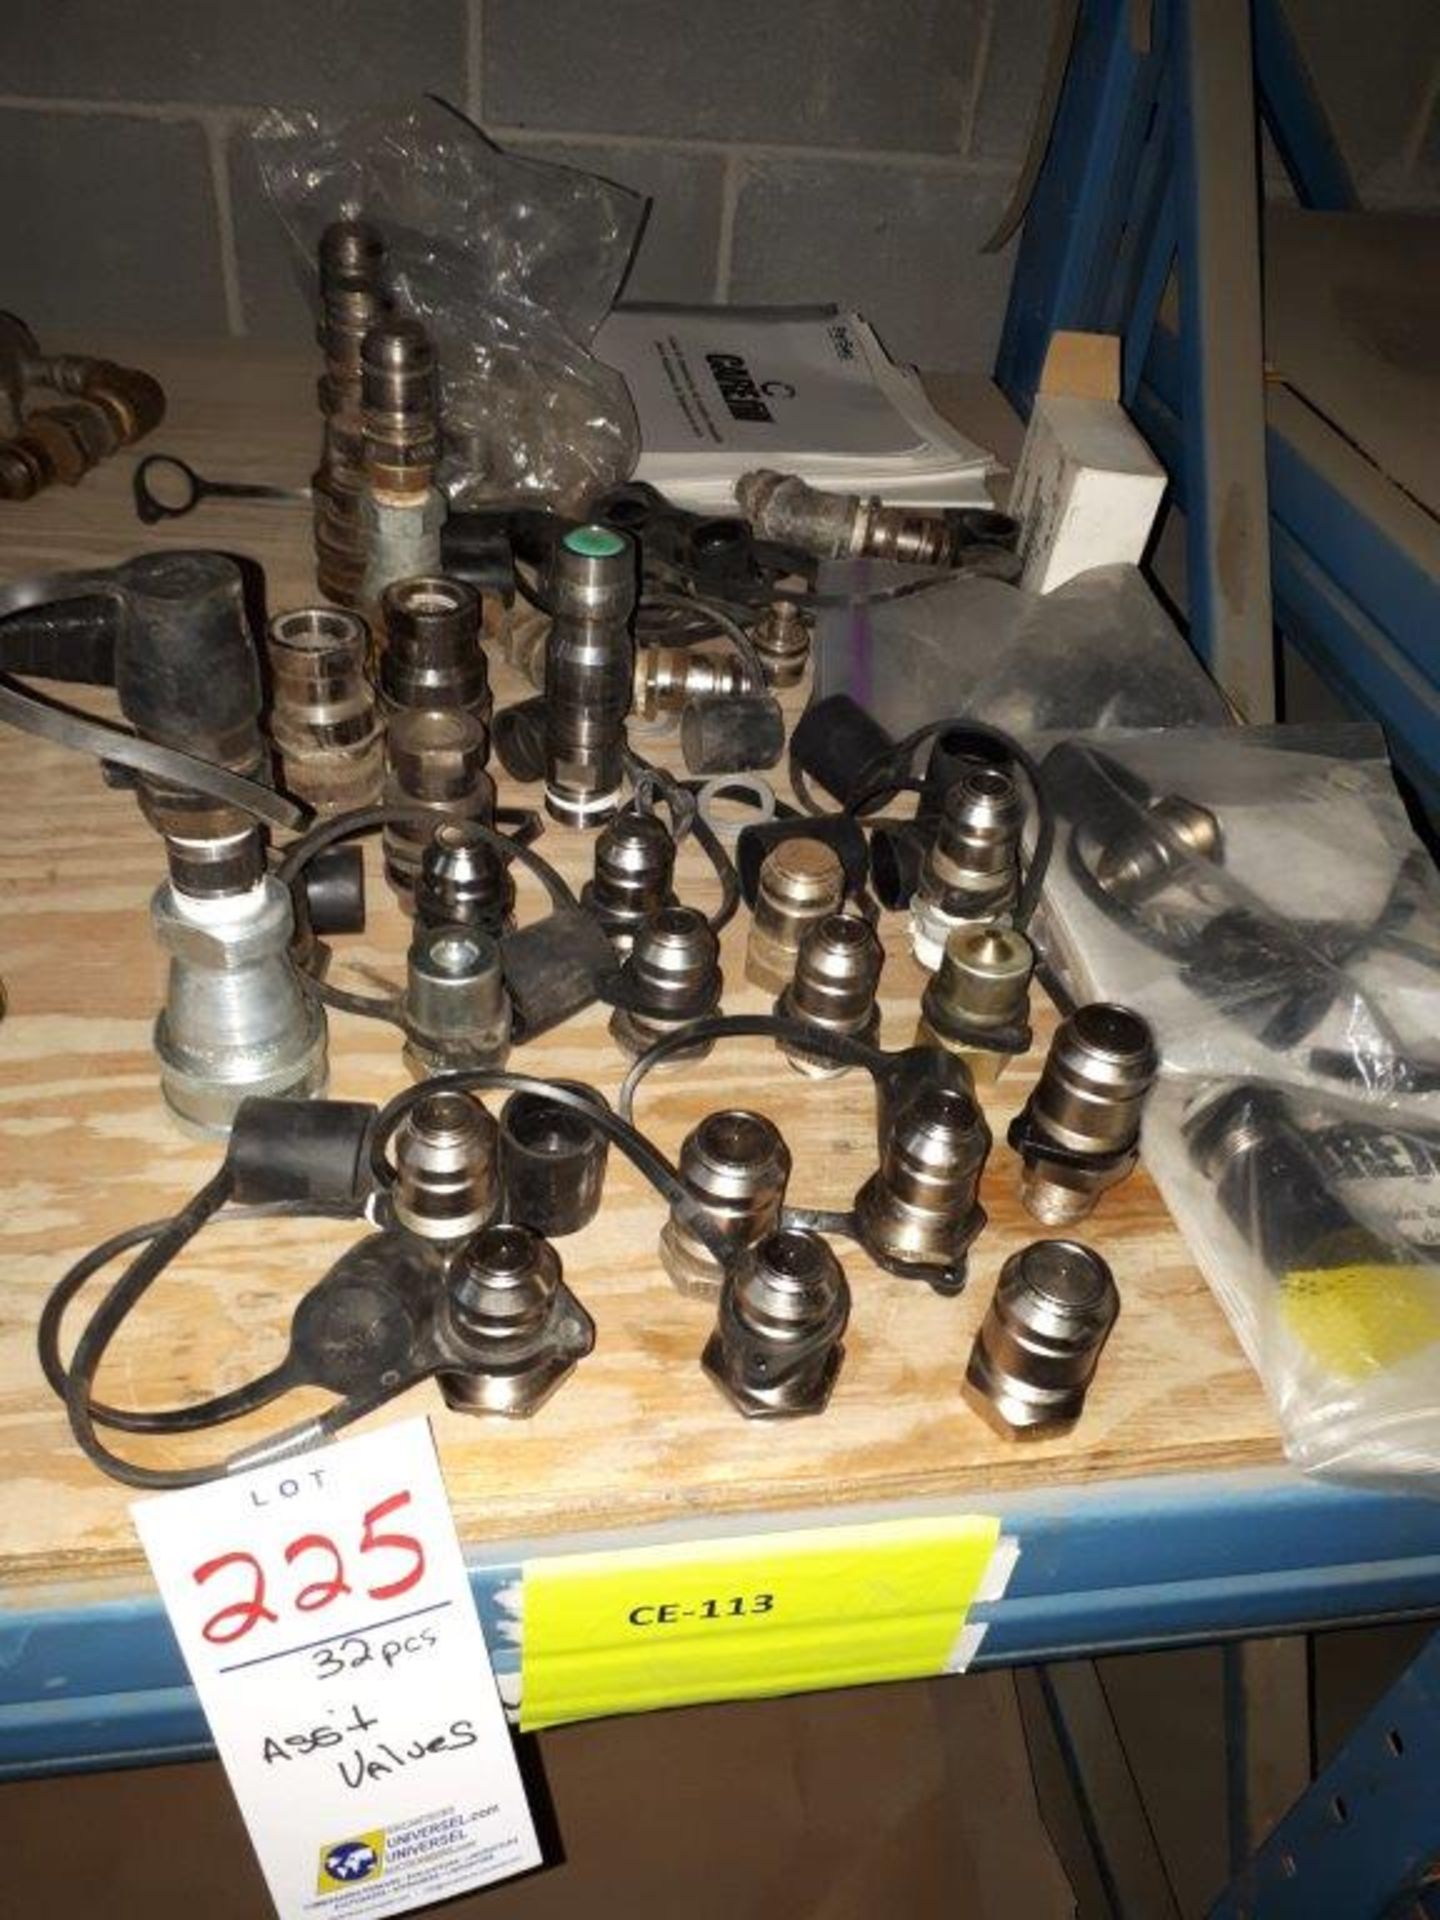 Assorted valves